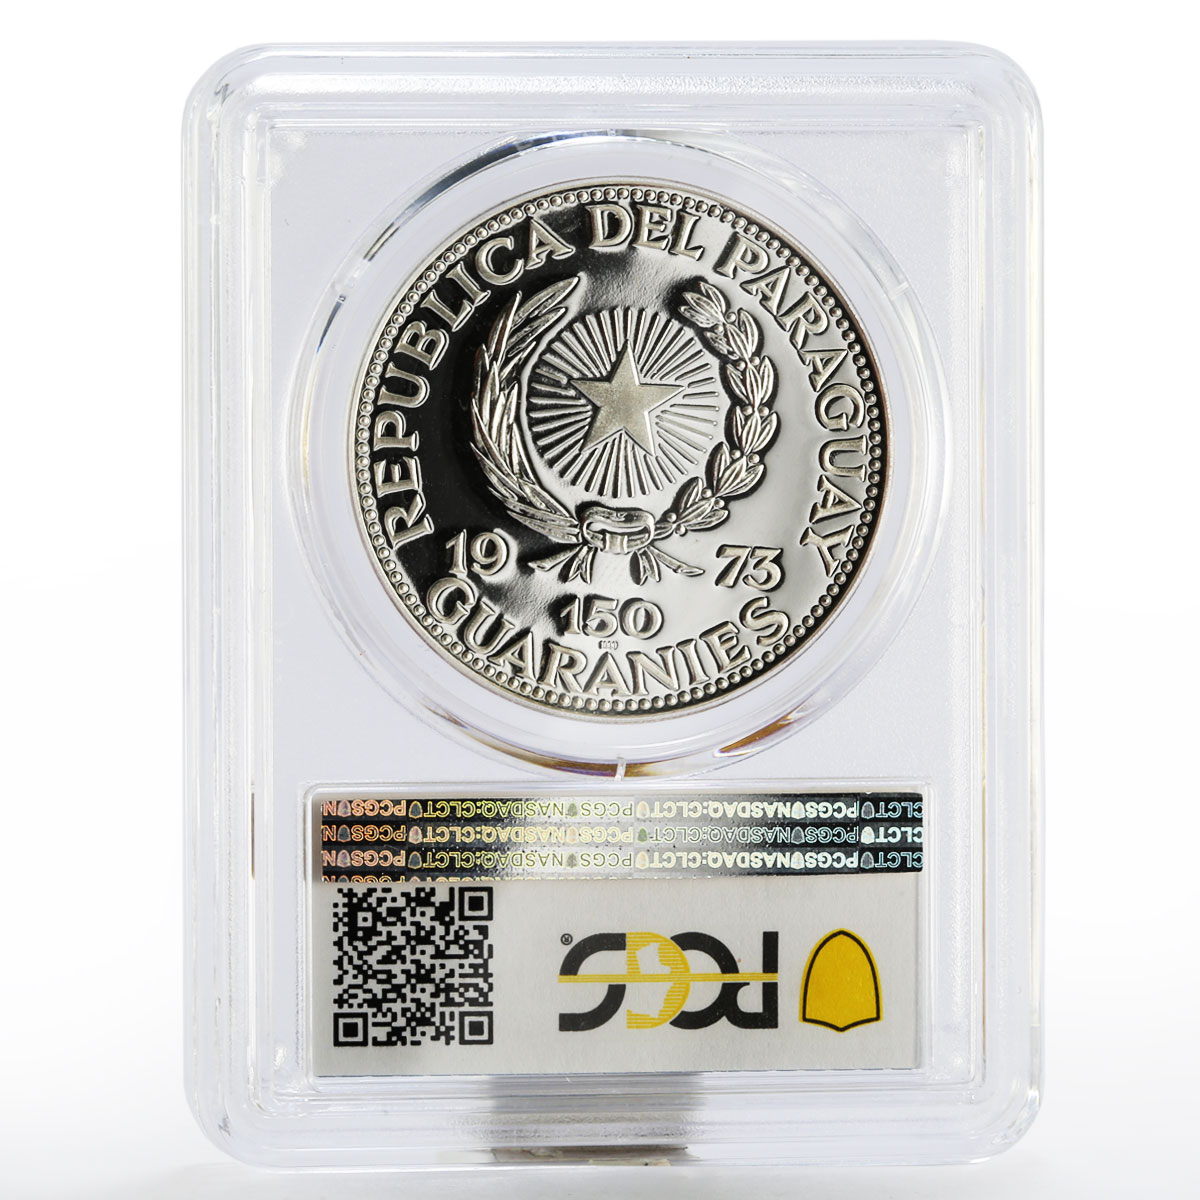 Paraguay 150 guaranies Francisco Solano Lopez arms PR-69 PCGS silver coin 1973